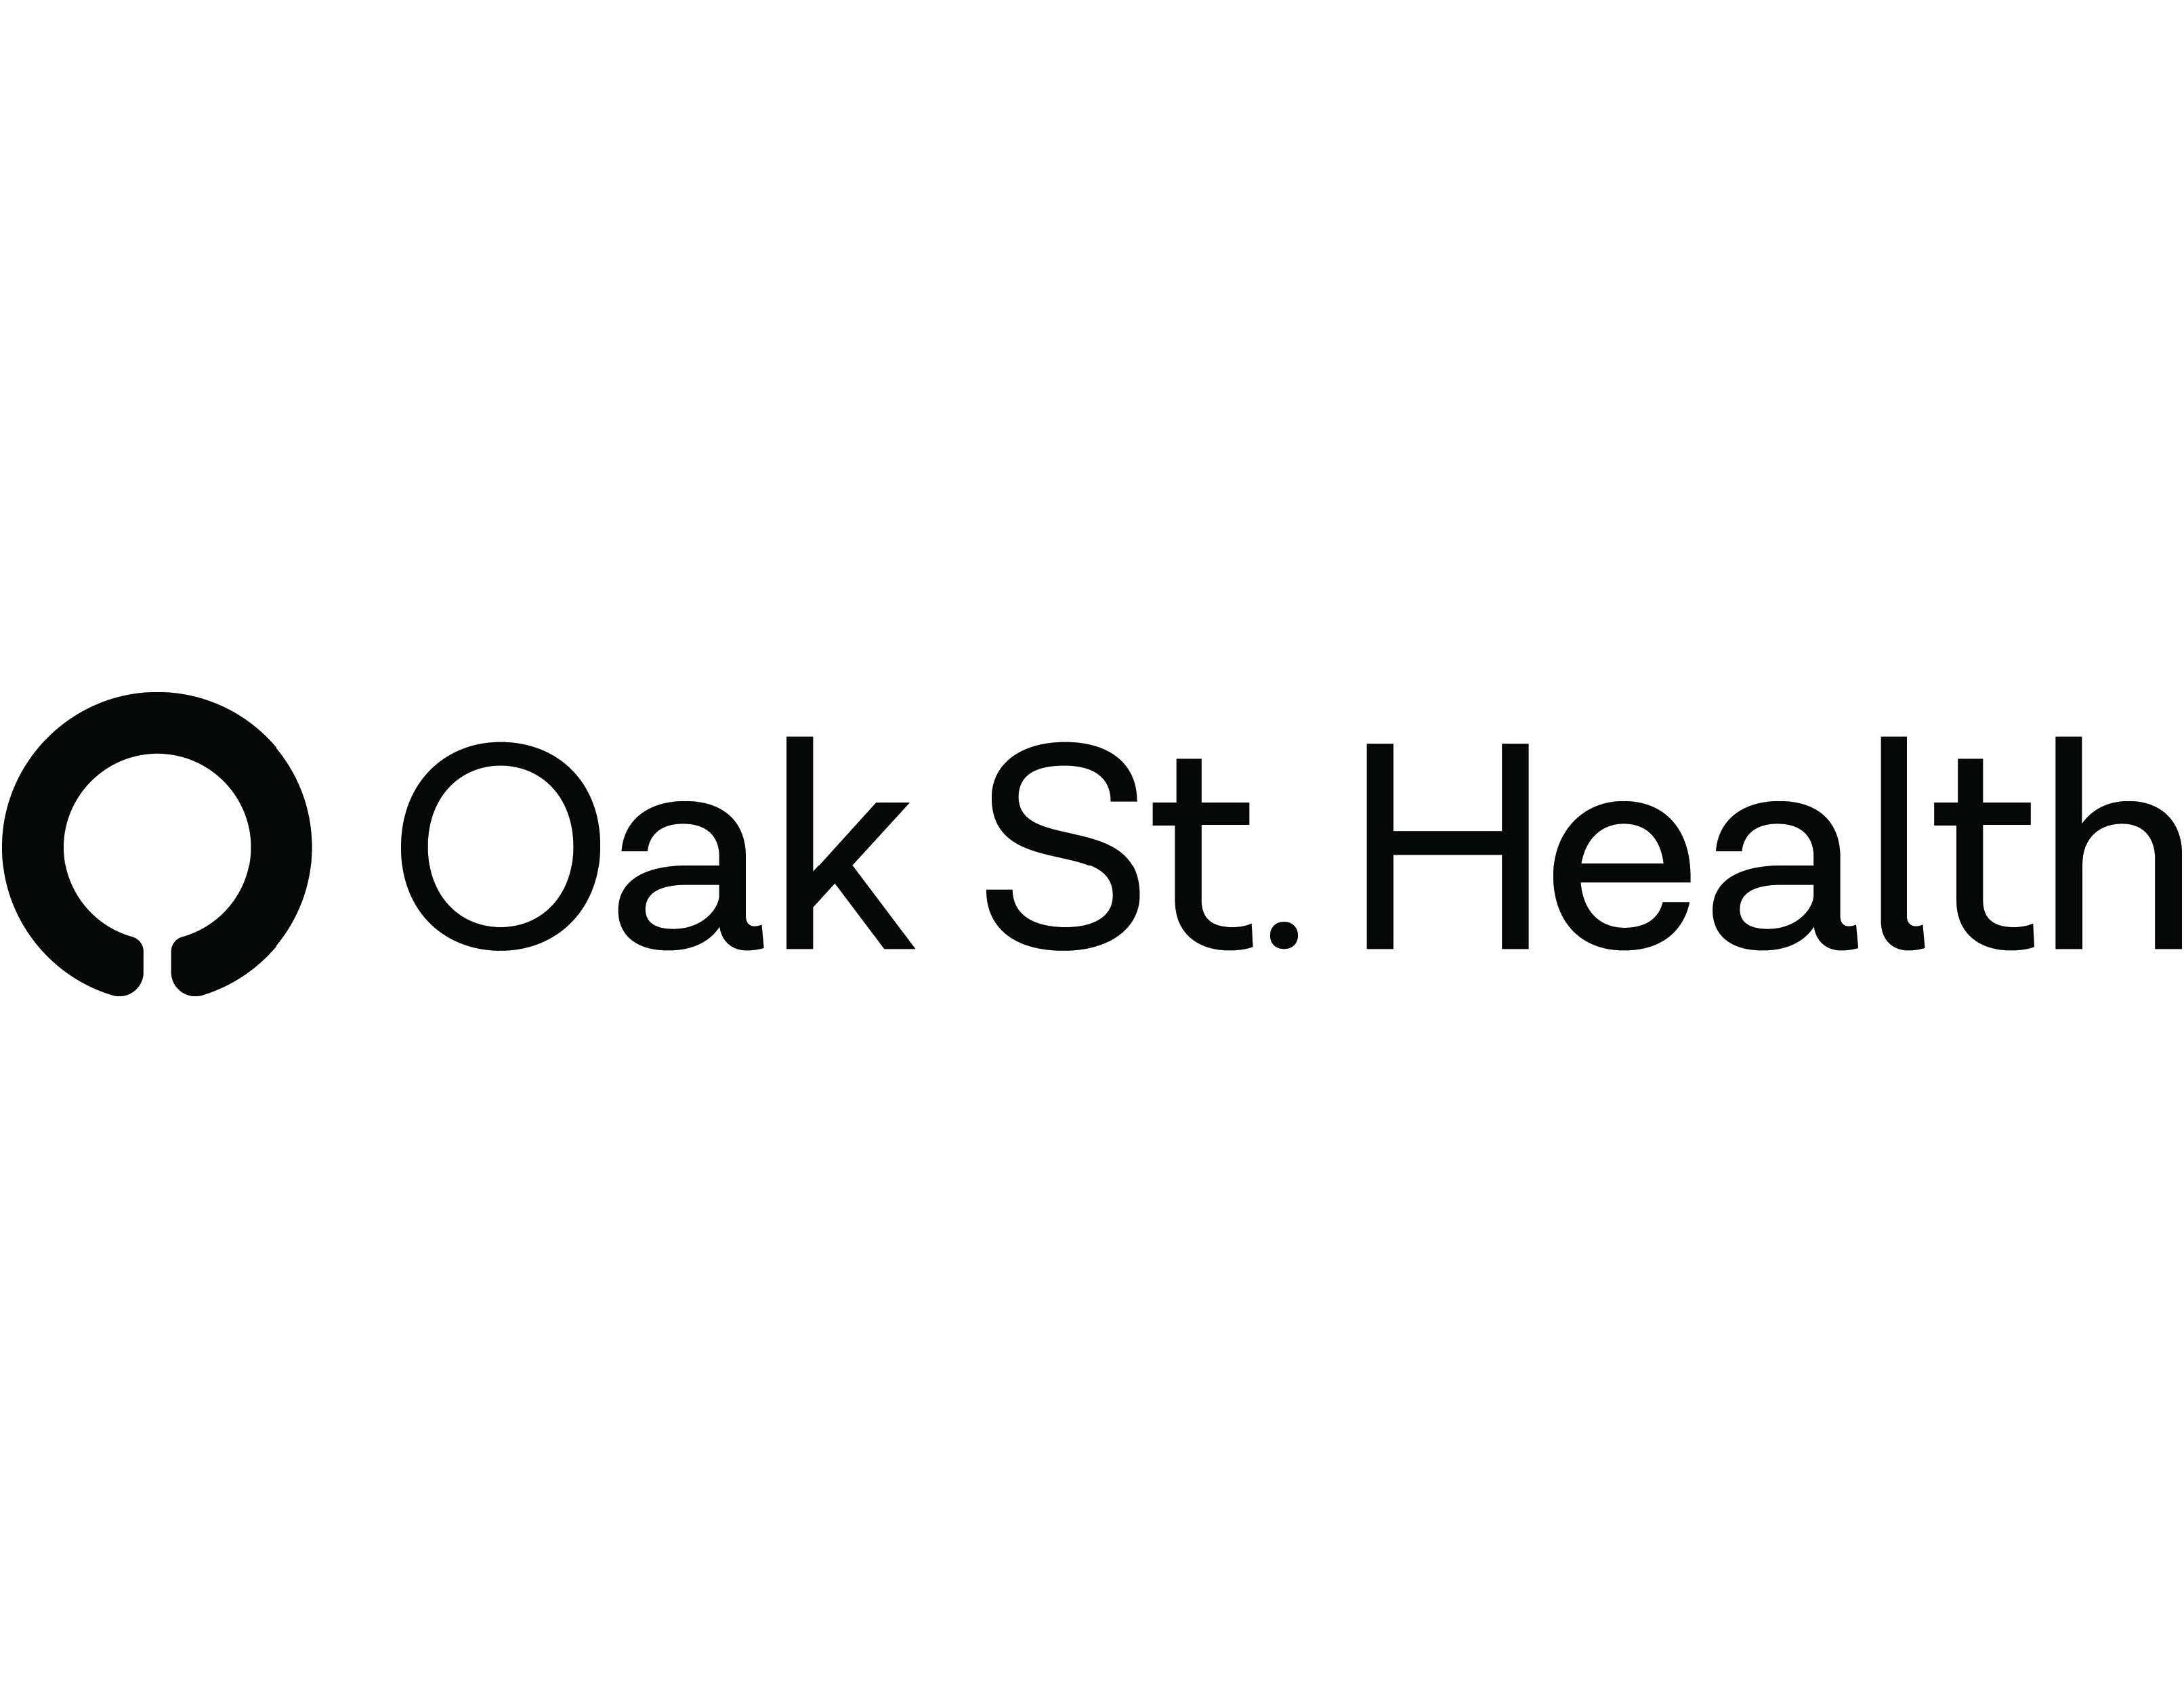 OAK ST. HEALTH